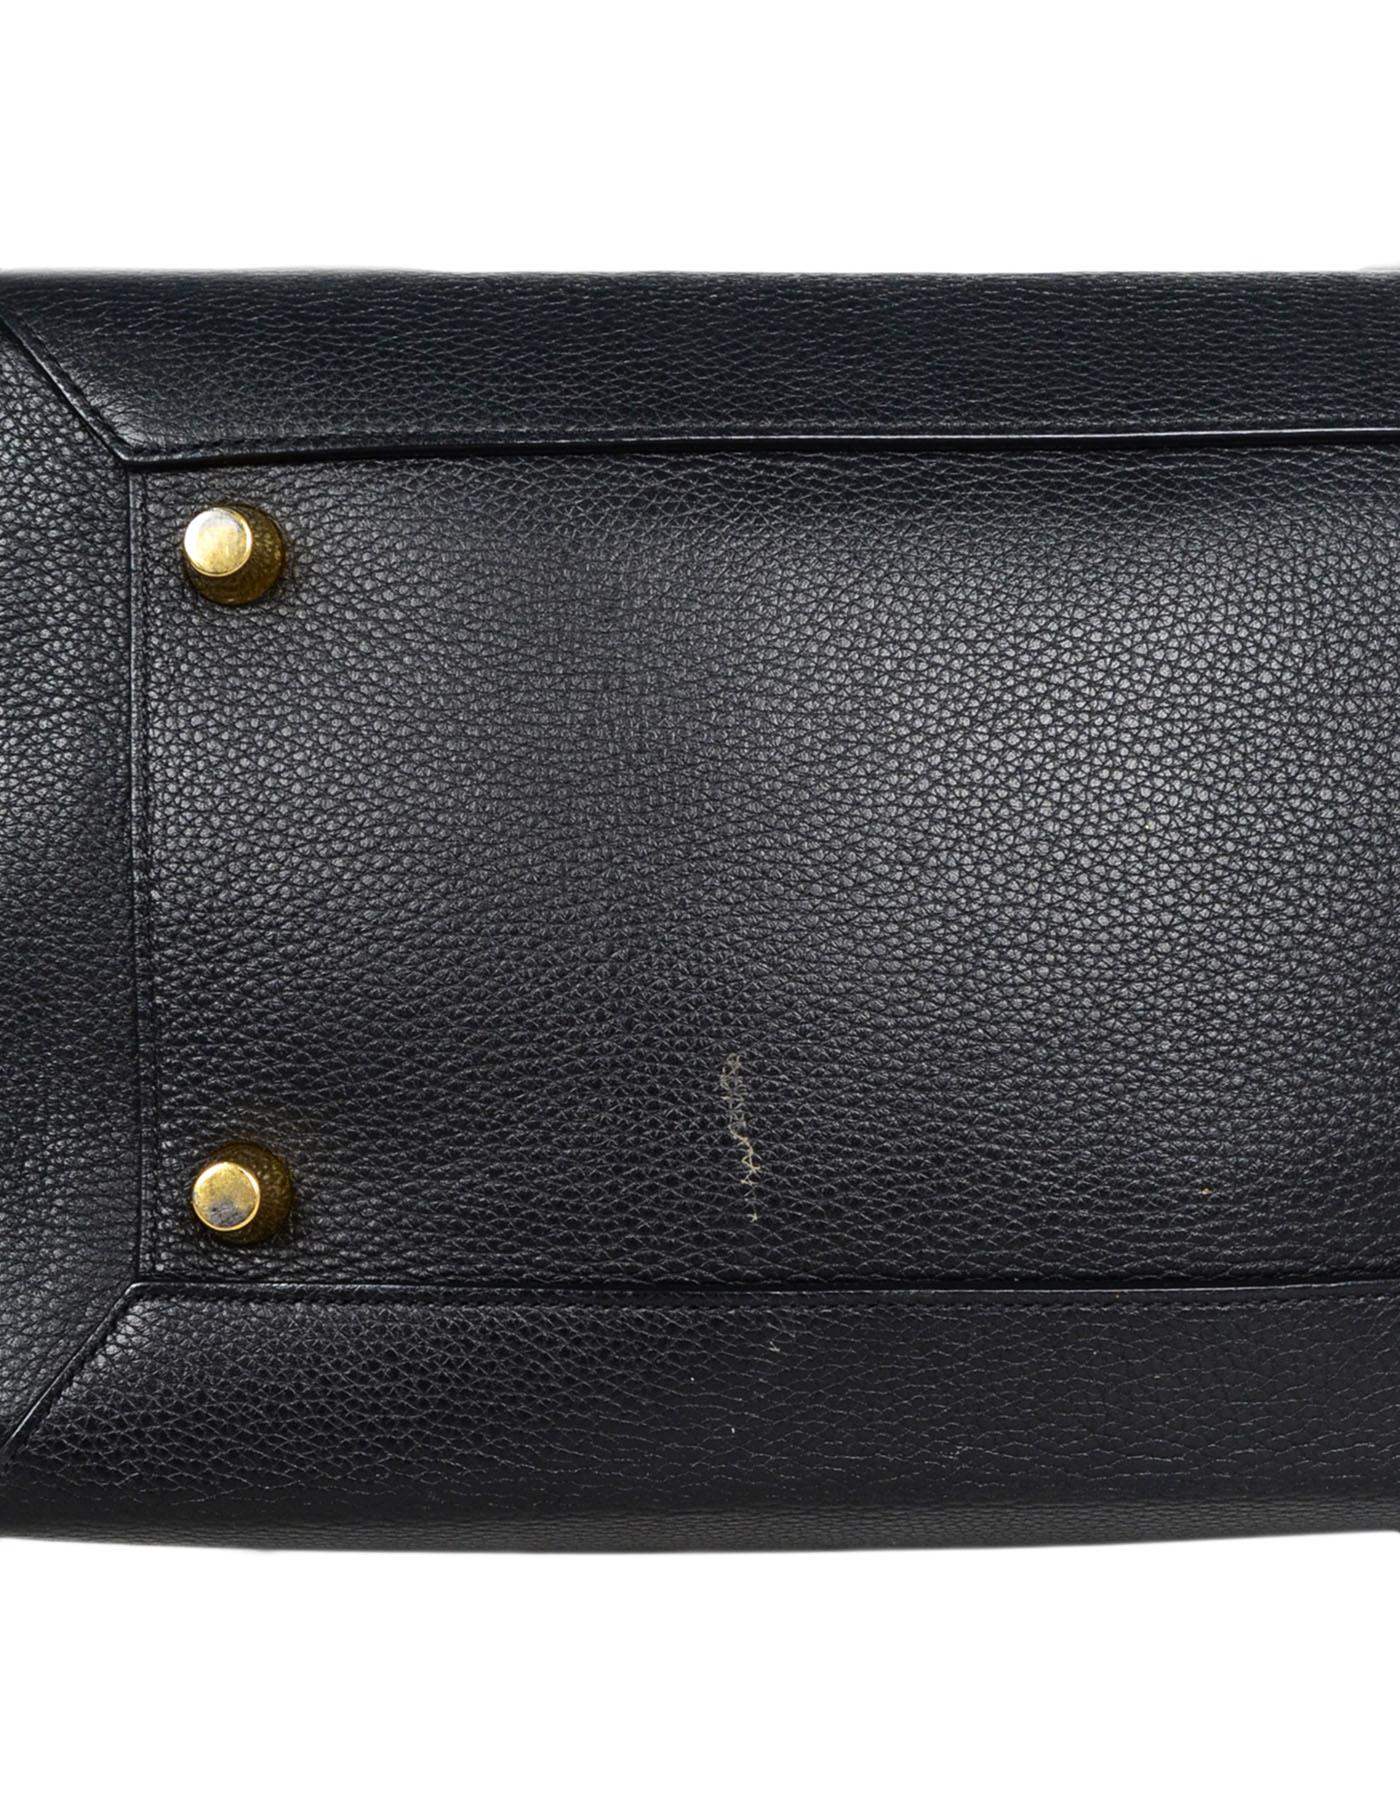 Celine Black Grained Calfskin Leather Small Belt Bag 2